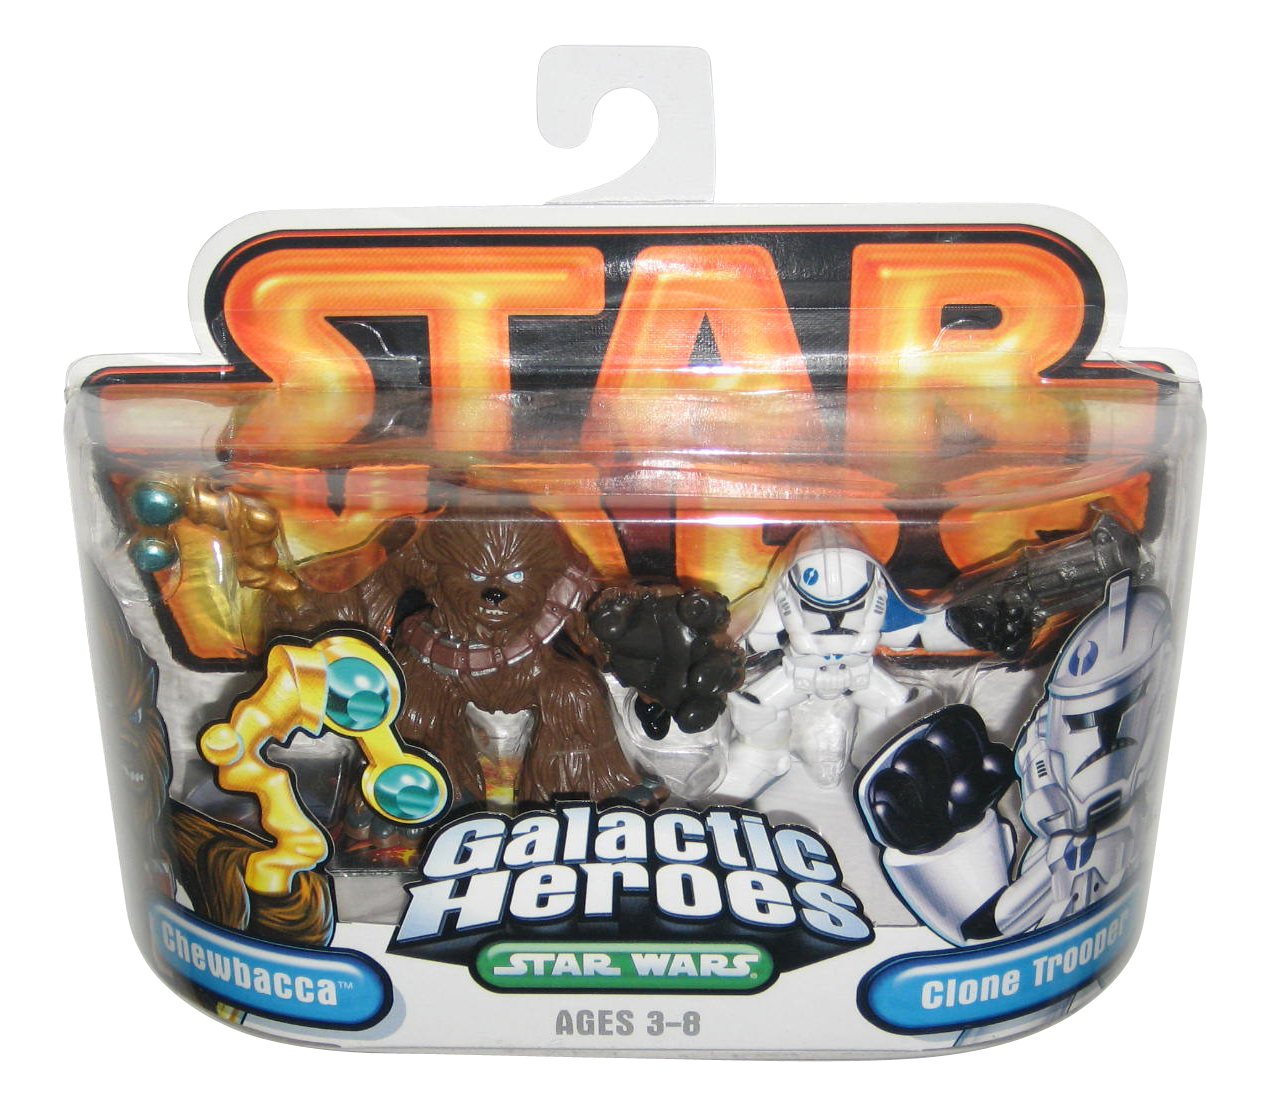 Star Wars Galactic Heroes Chewbacca & Clone Trooper - image 1 of 2